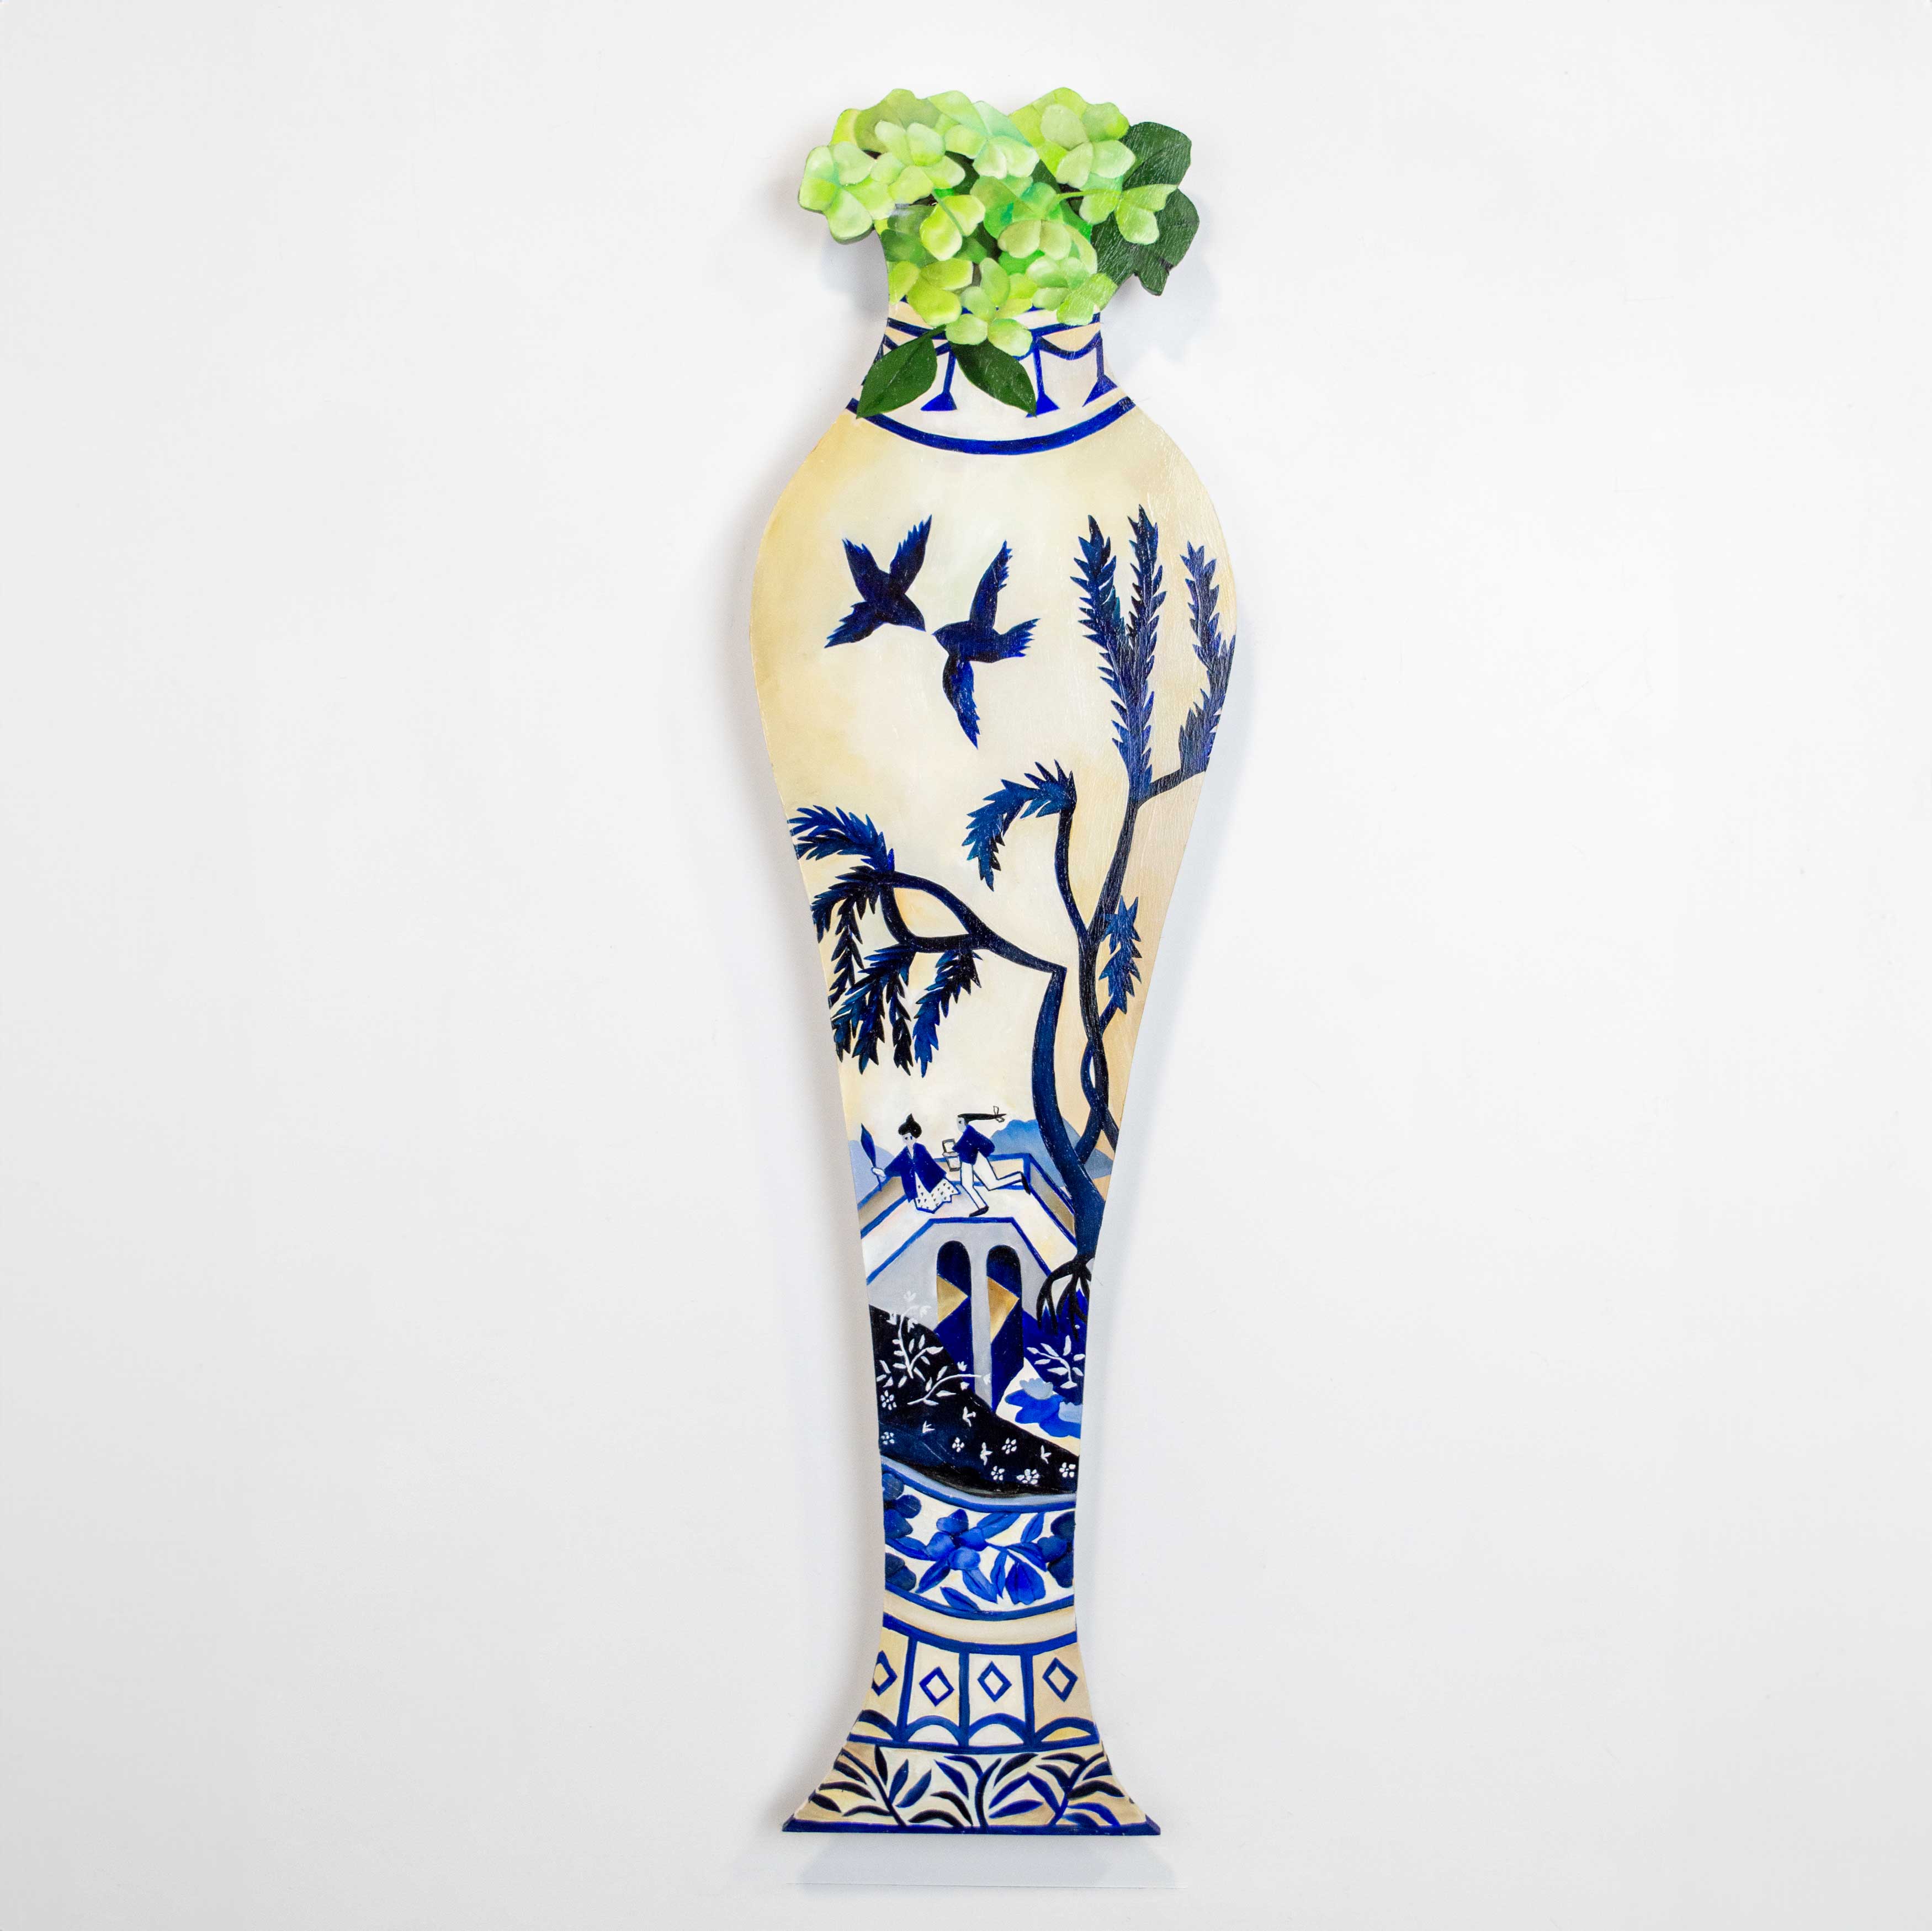 Willow Pattern Vase II